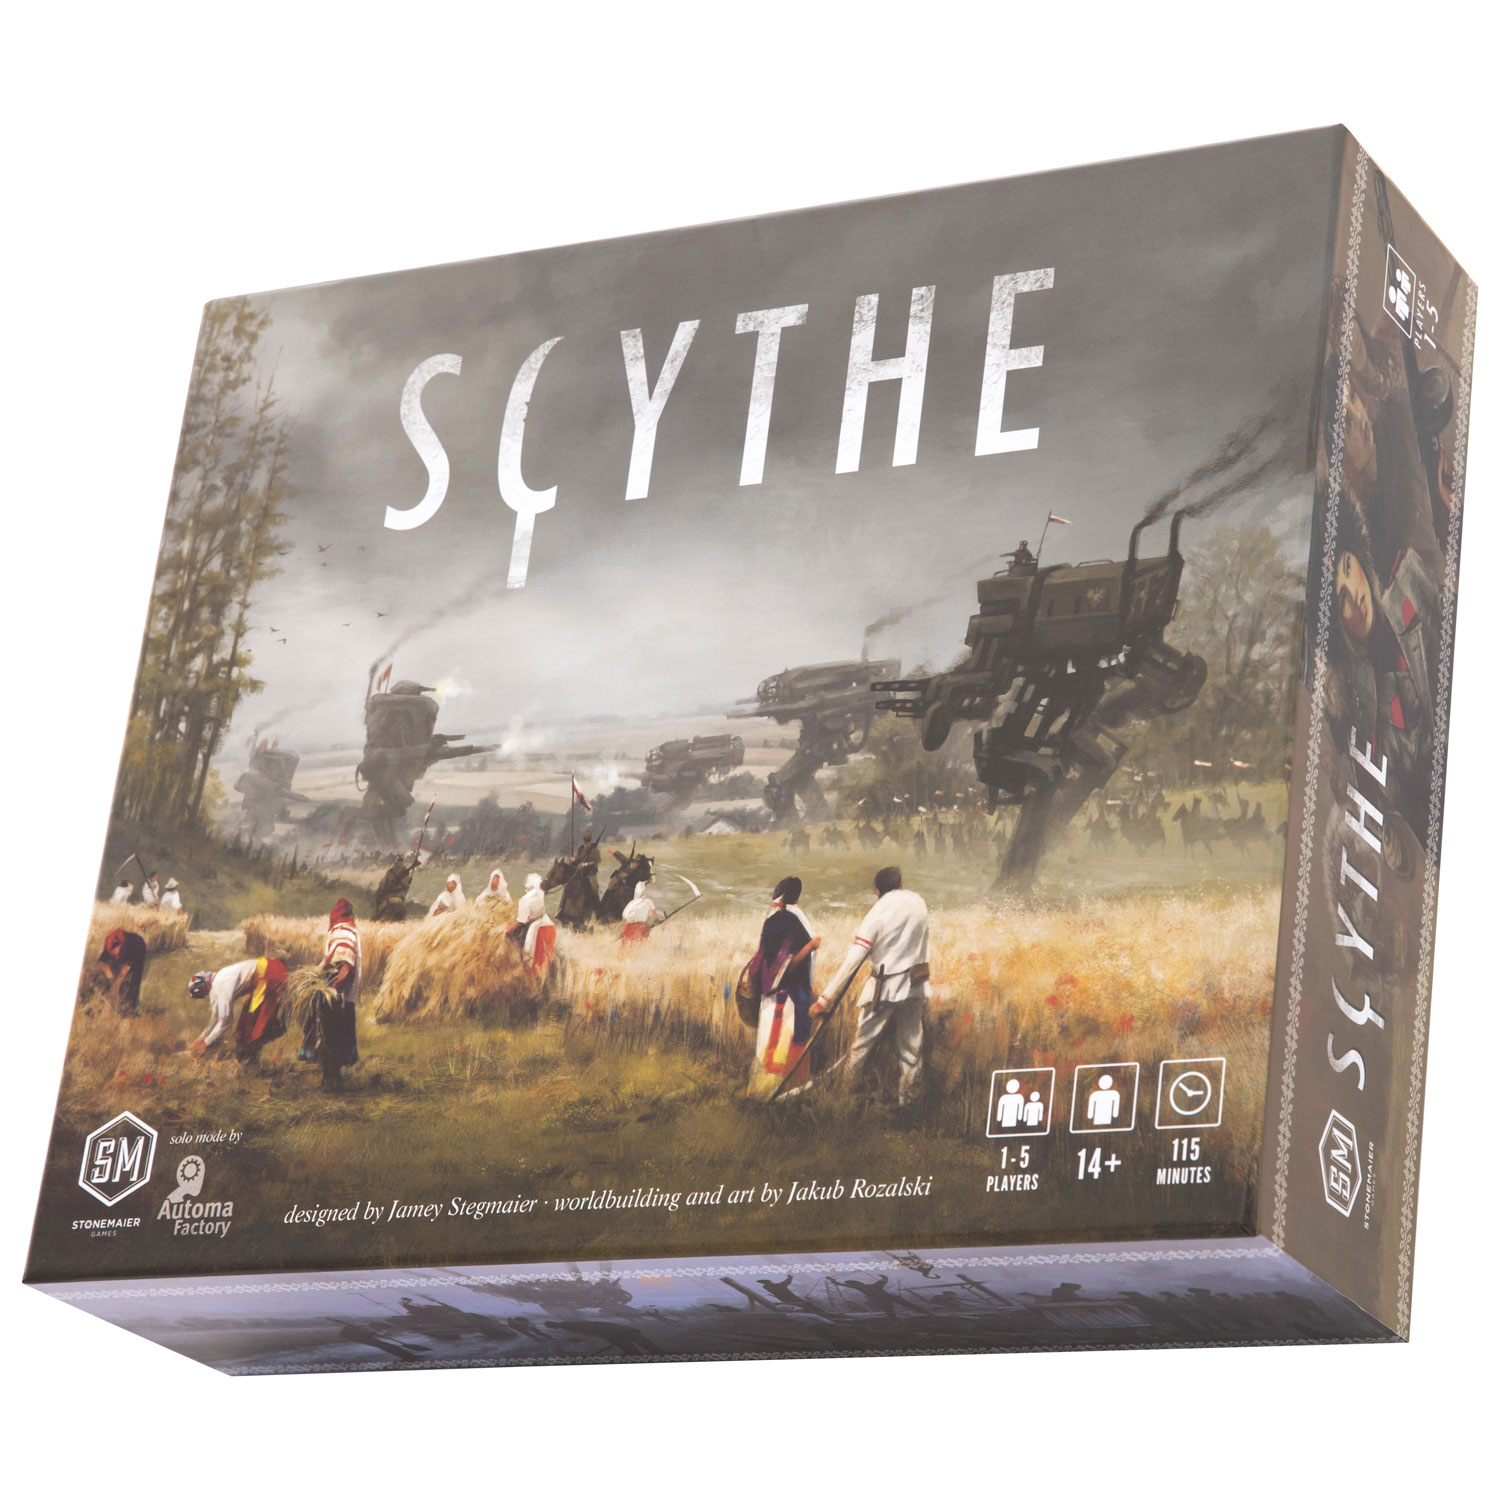 Scythe board game